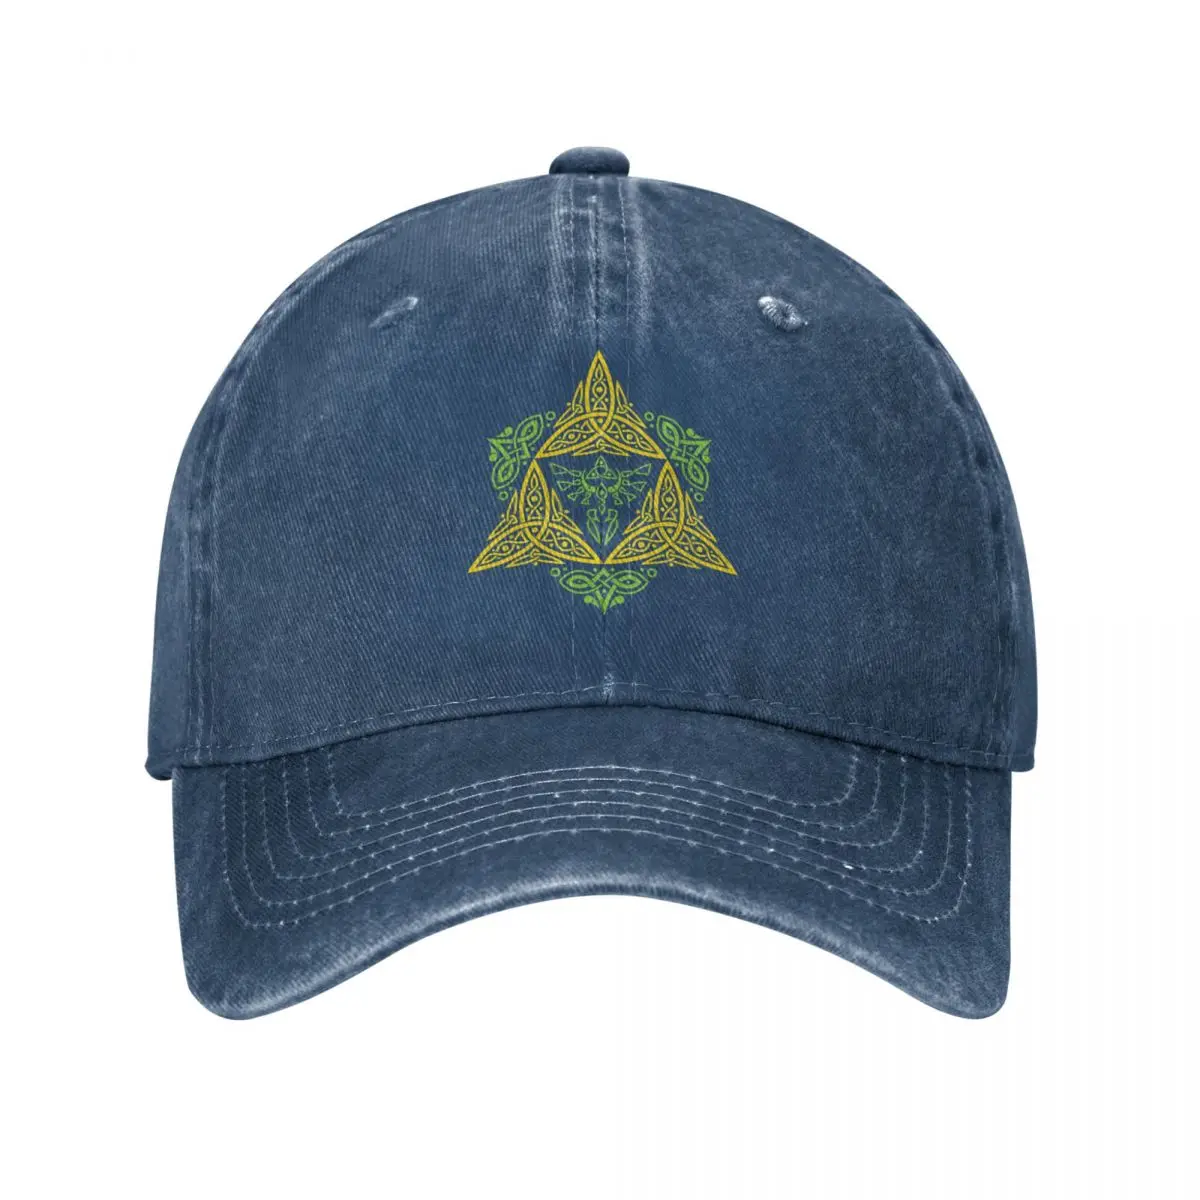 

Vintage The Legend Of Zeldas Logo Baseball Cap for Men Women Distressed Denim Headwear Outdoor Summer Caps Hat